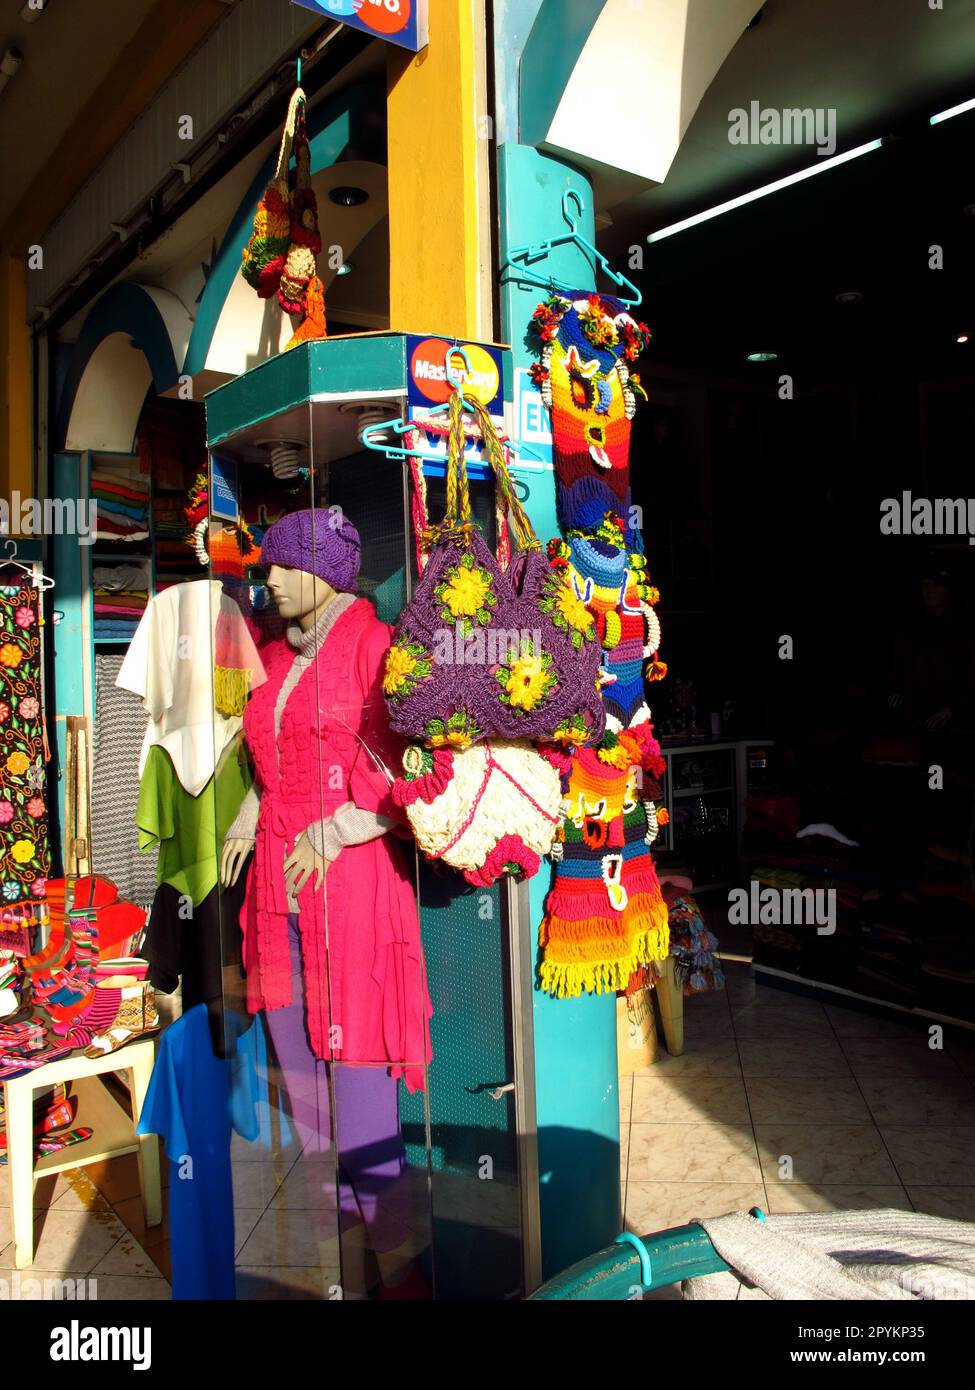 Inka Market, The local market in Miraflores, Lima, South America Stock Photo